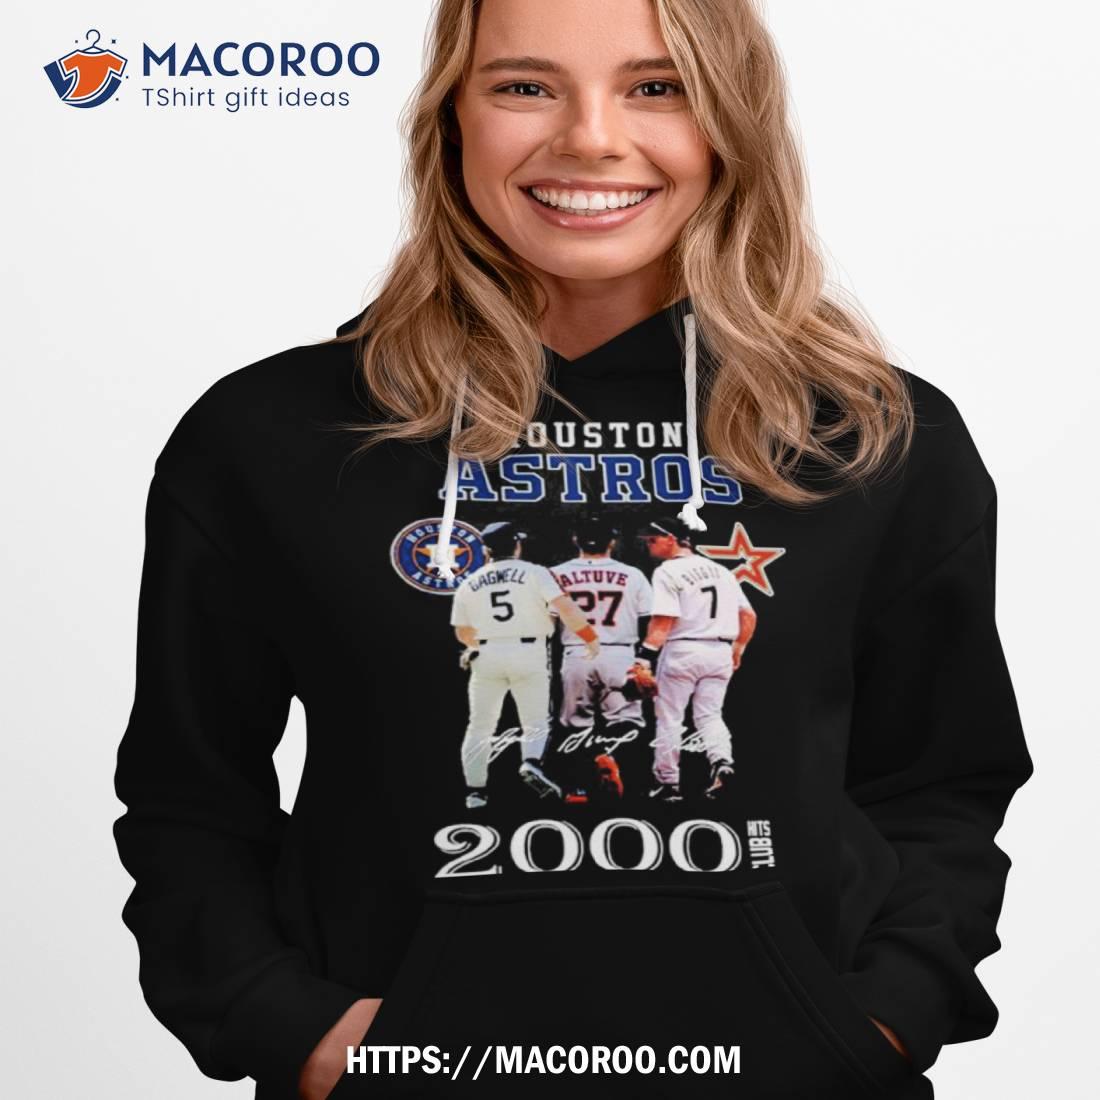 Jose Altuve Houston Astros 2000 Career Hits T-Shirt, hoodie